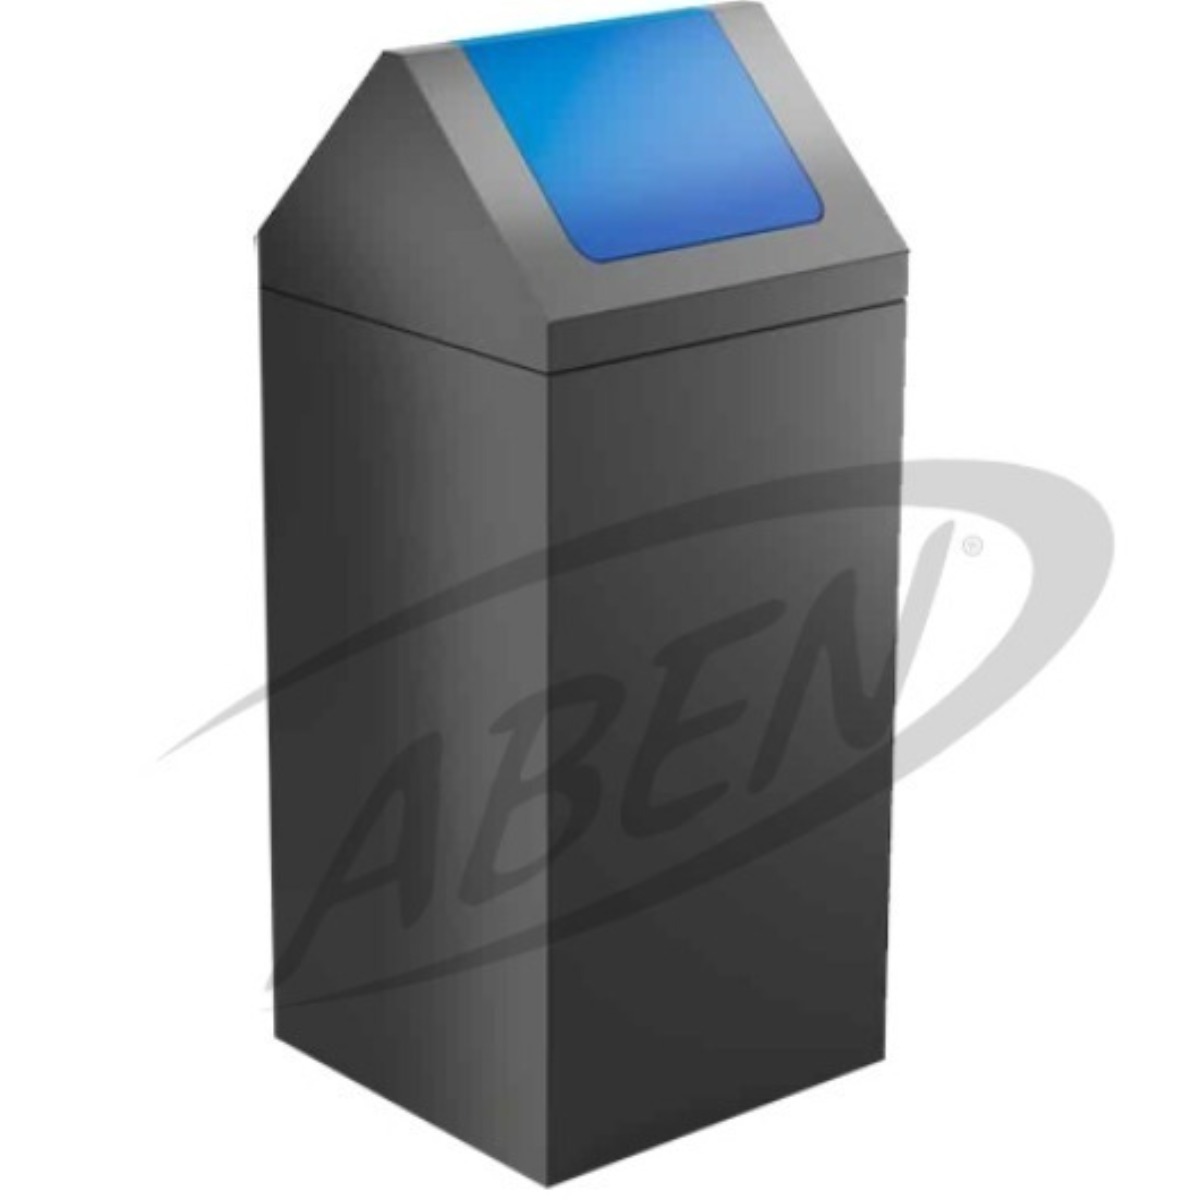 AB-774 Recycle Bin product logo